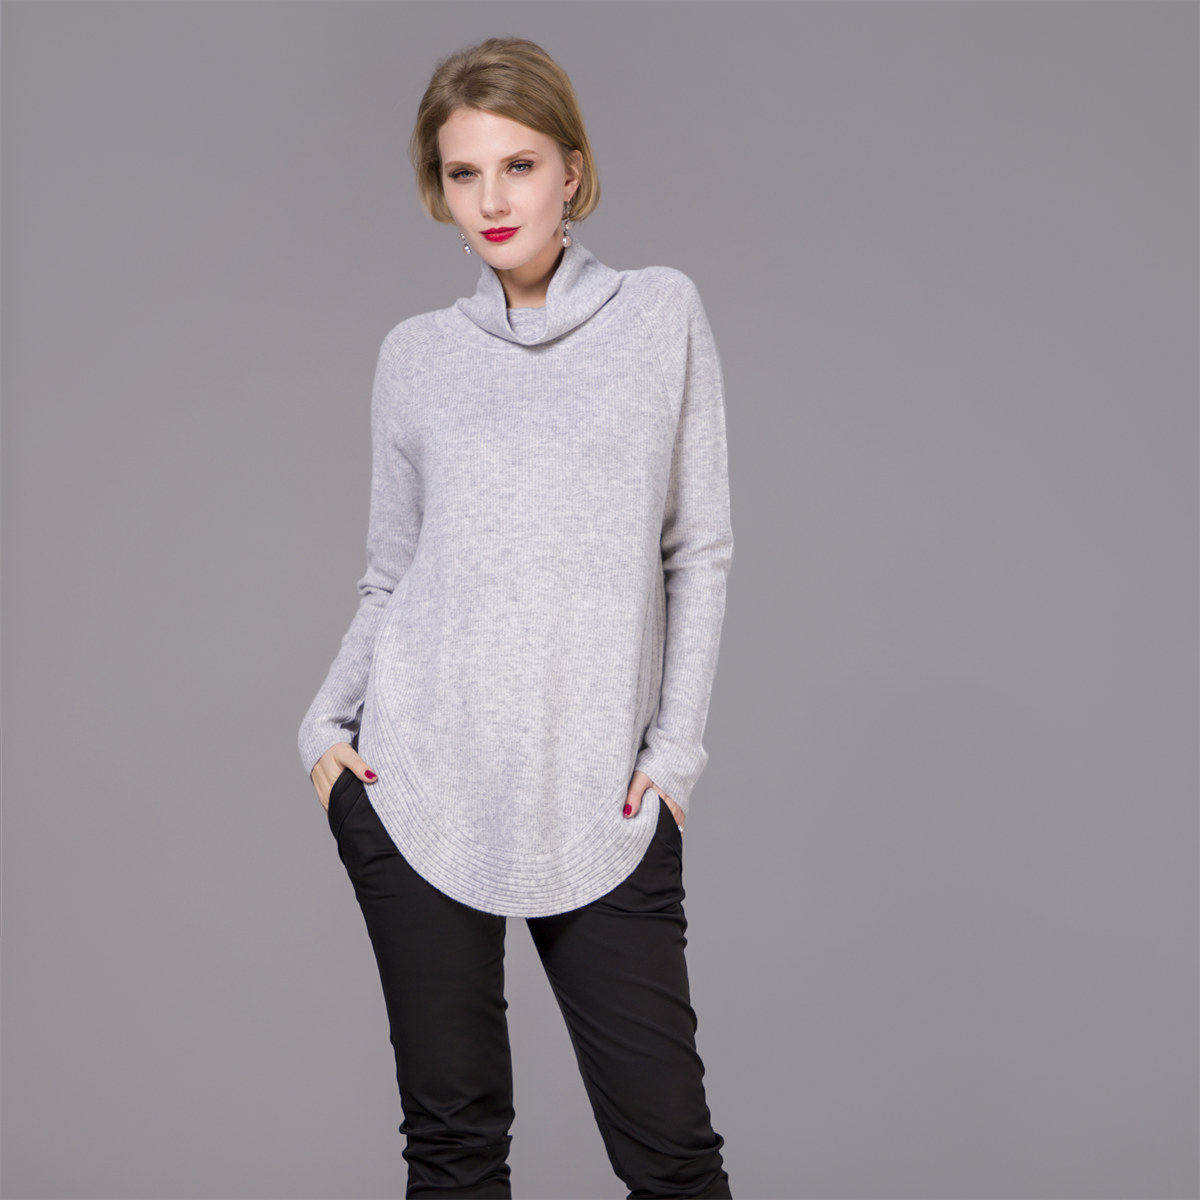 Turtle neck cashmere sweater 6580